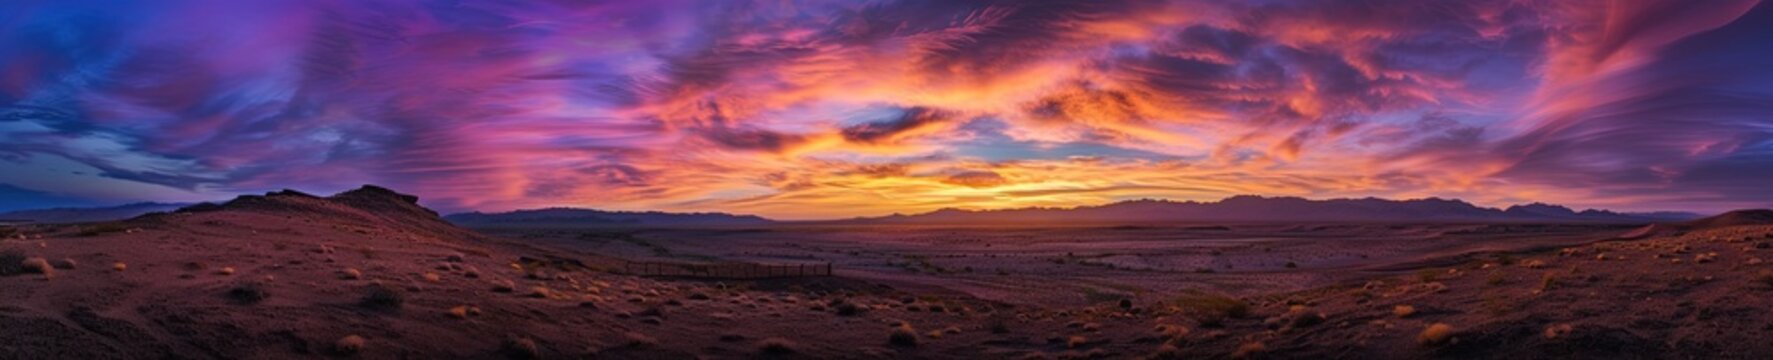 desert sunset in the Arizona southwest © Brian